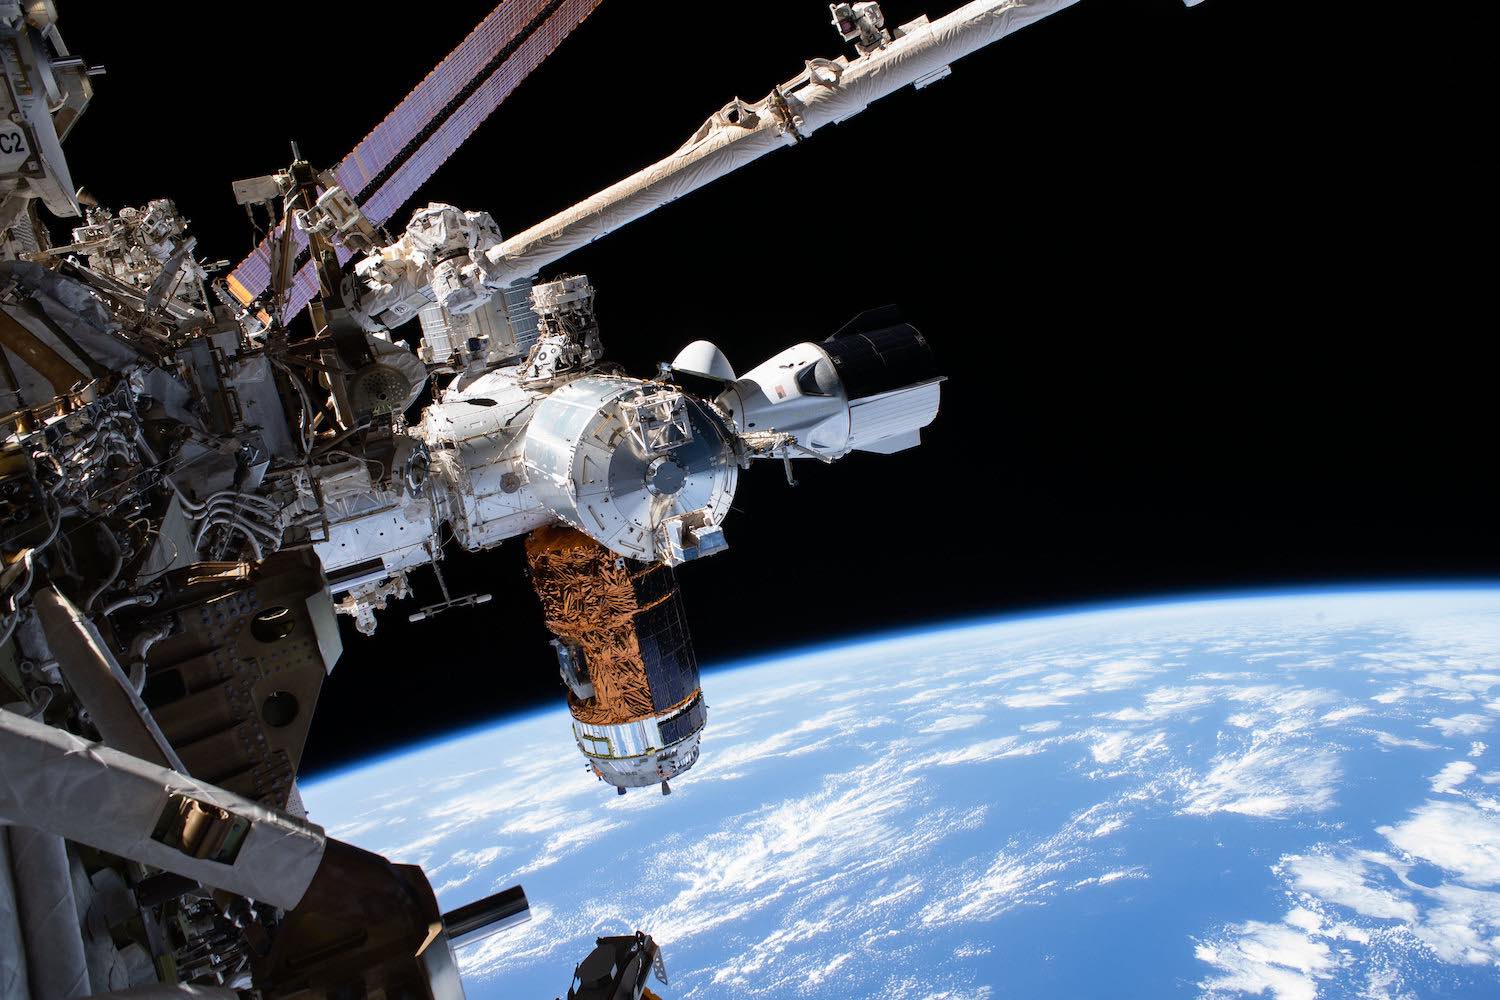 NASA confirms designs for Crew Dragon splashdown Aug. 2, temperature permitting – Spaceflight Now